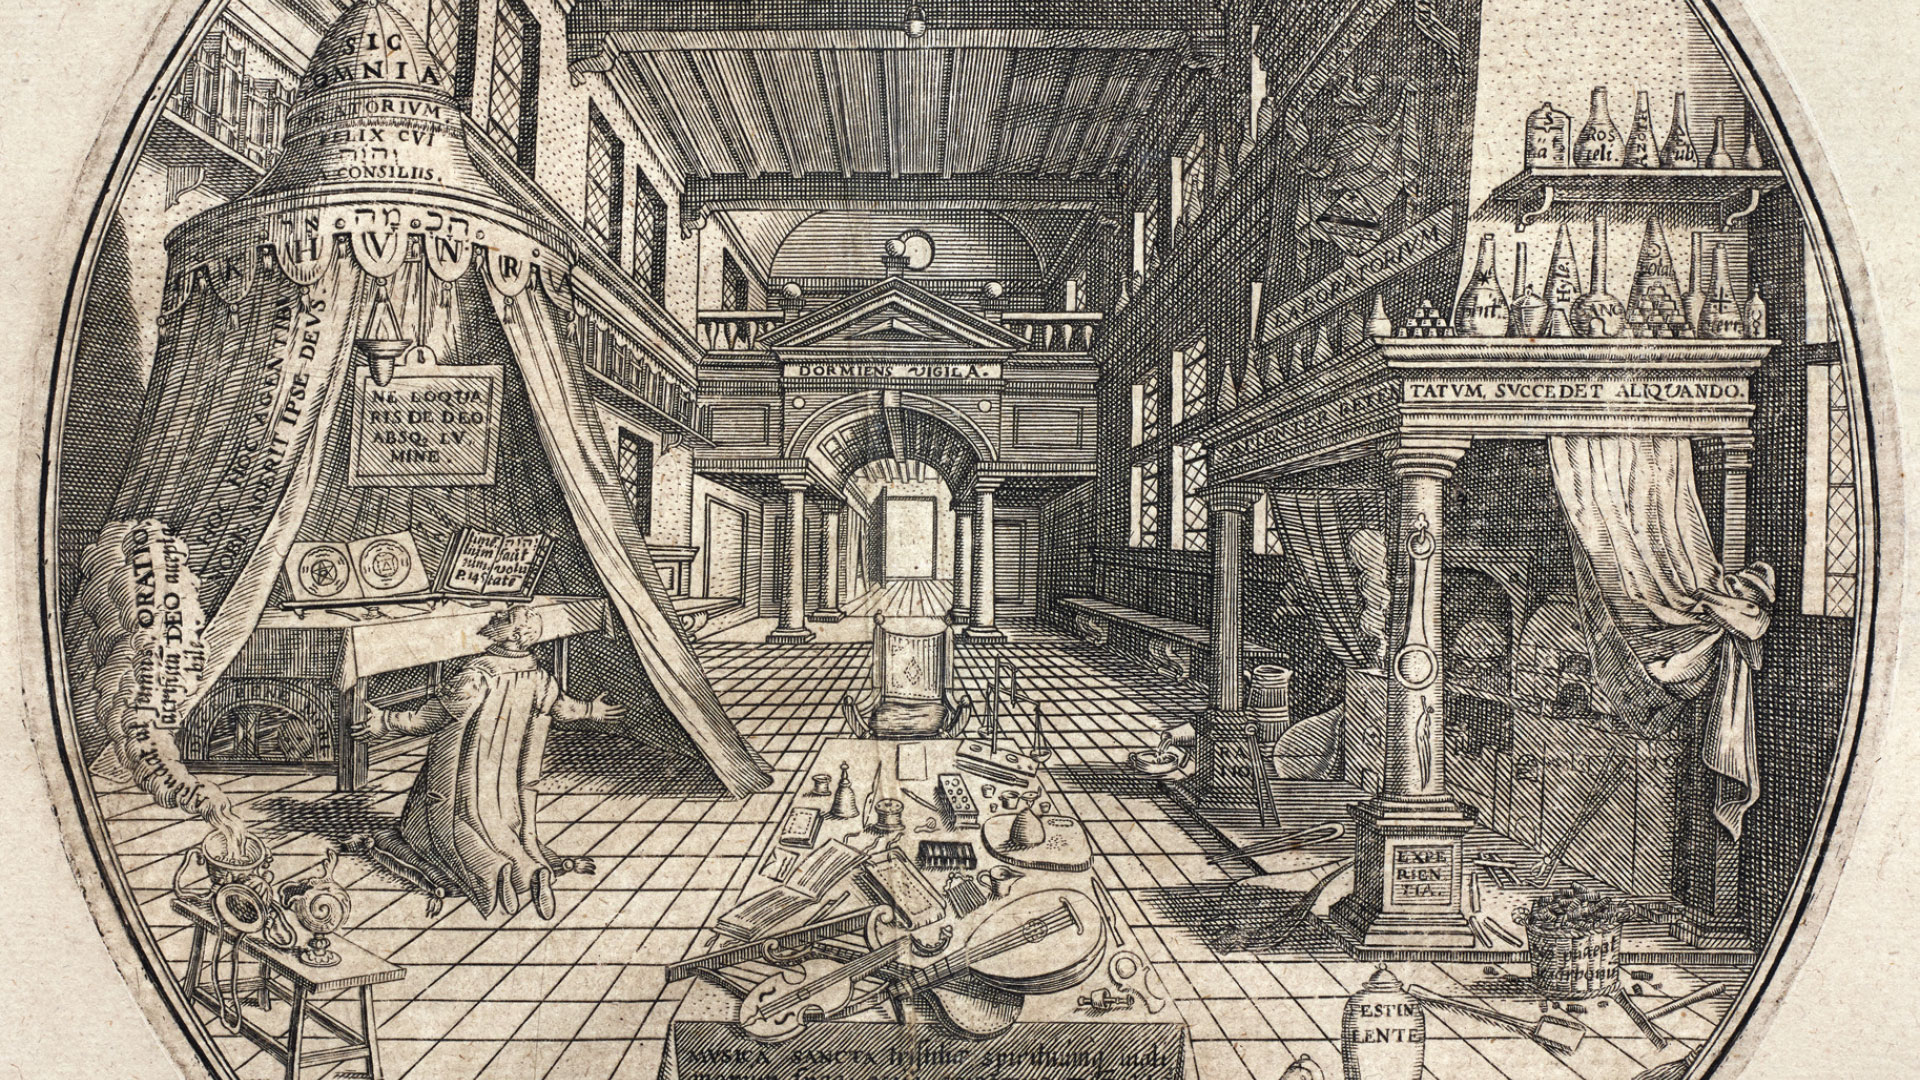 The Alchemical Laboratory in the Fine Arts